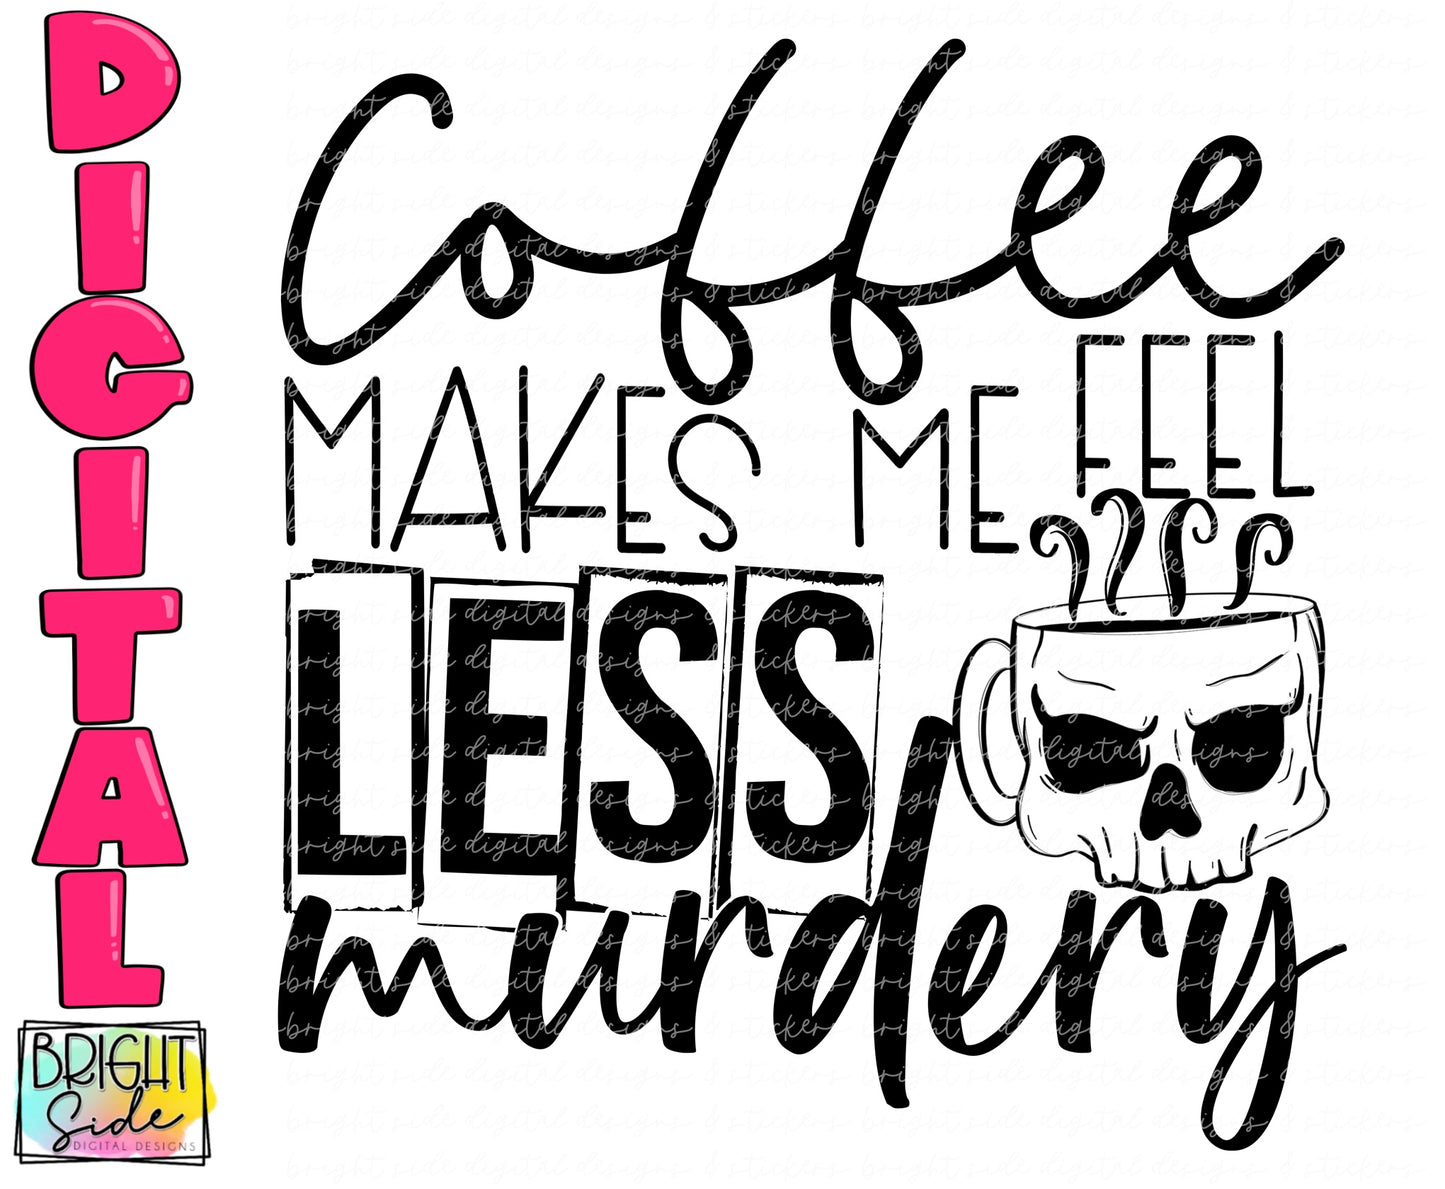 Coffee makes me feel less murdery